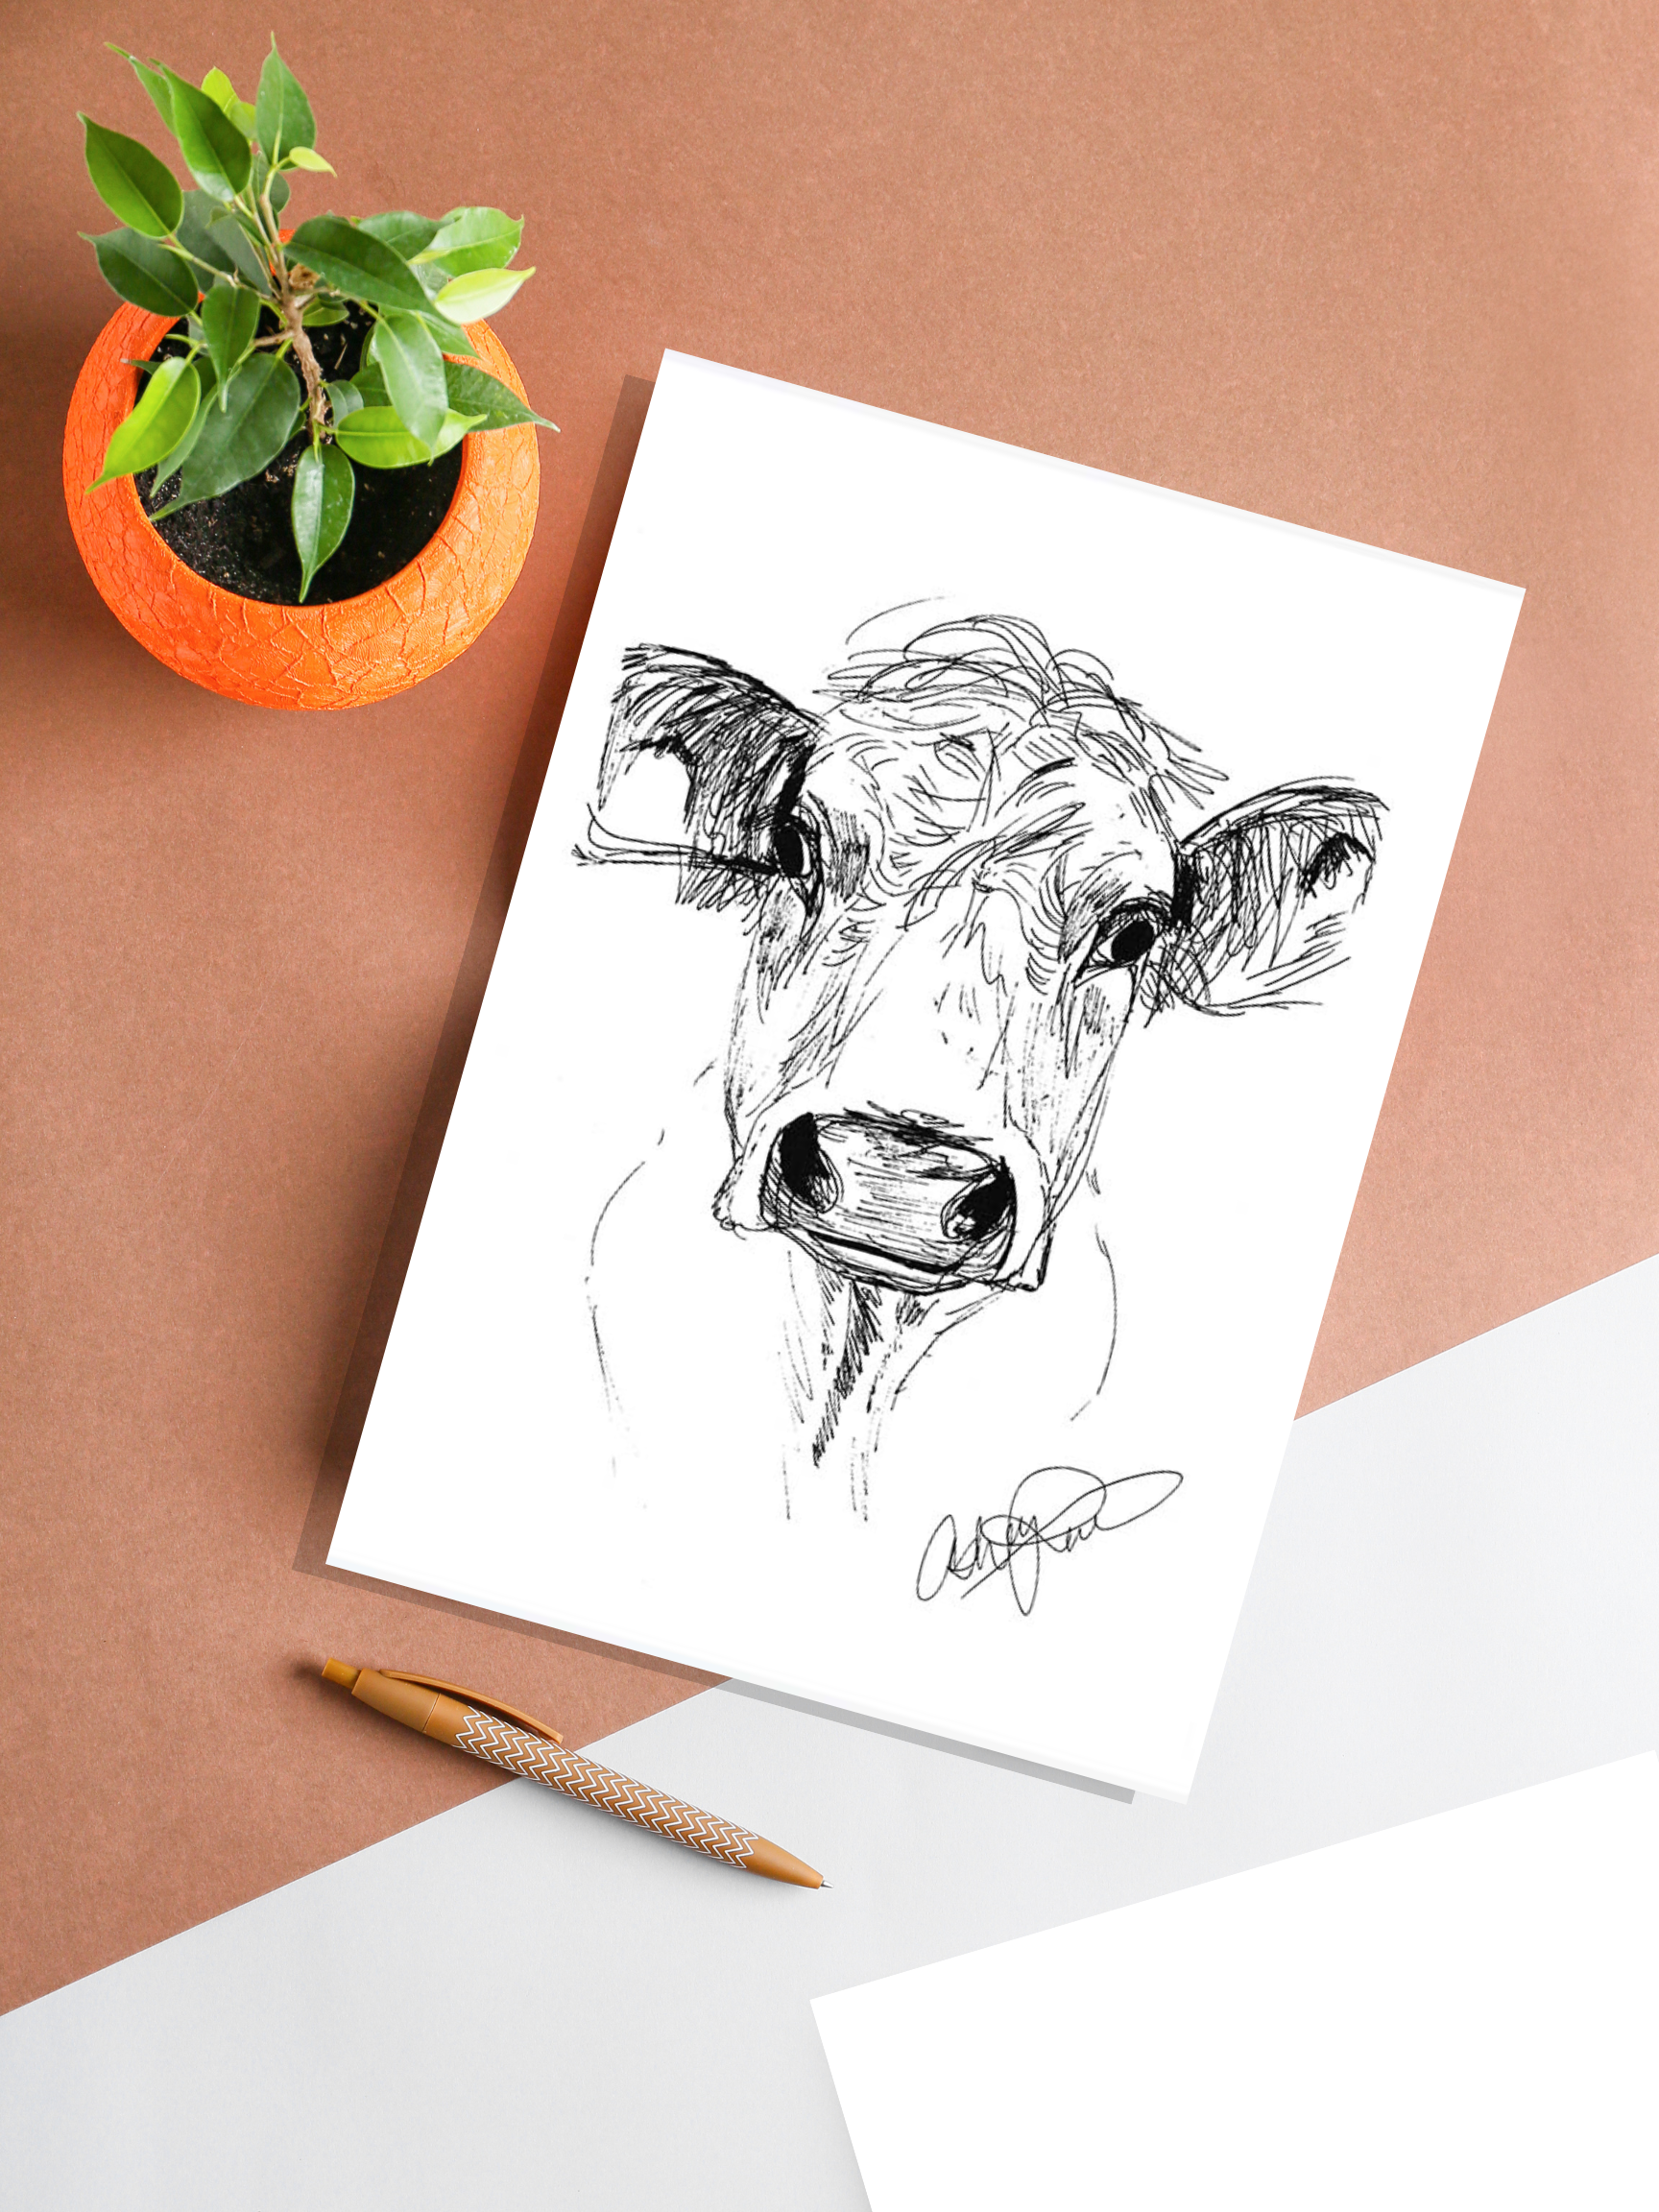 Ink Cow Sketch - Original Art Print on table